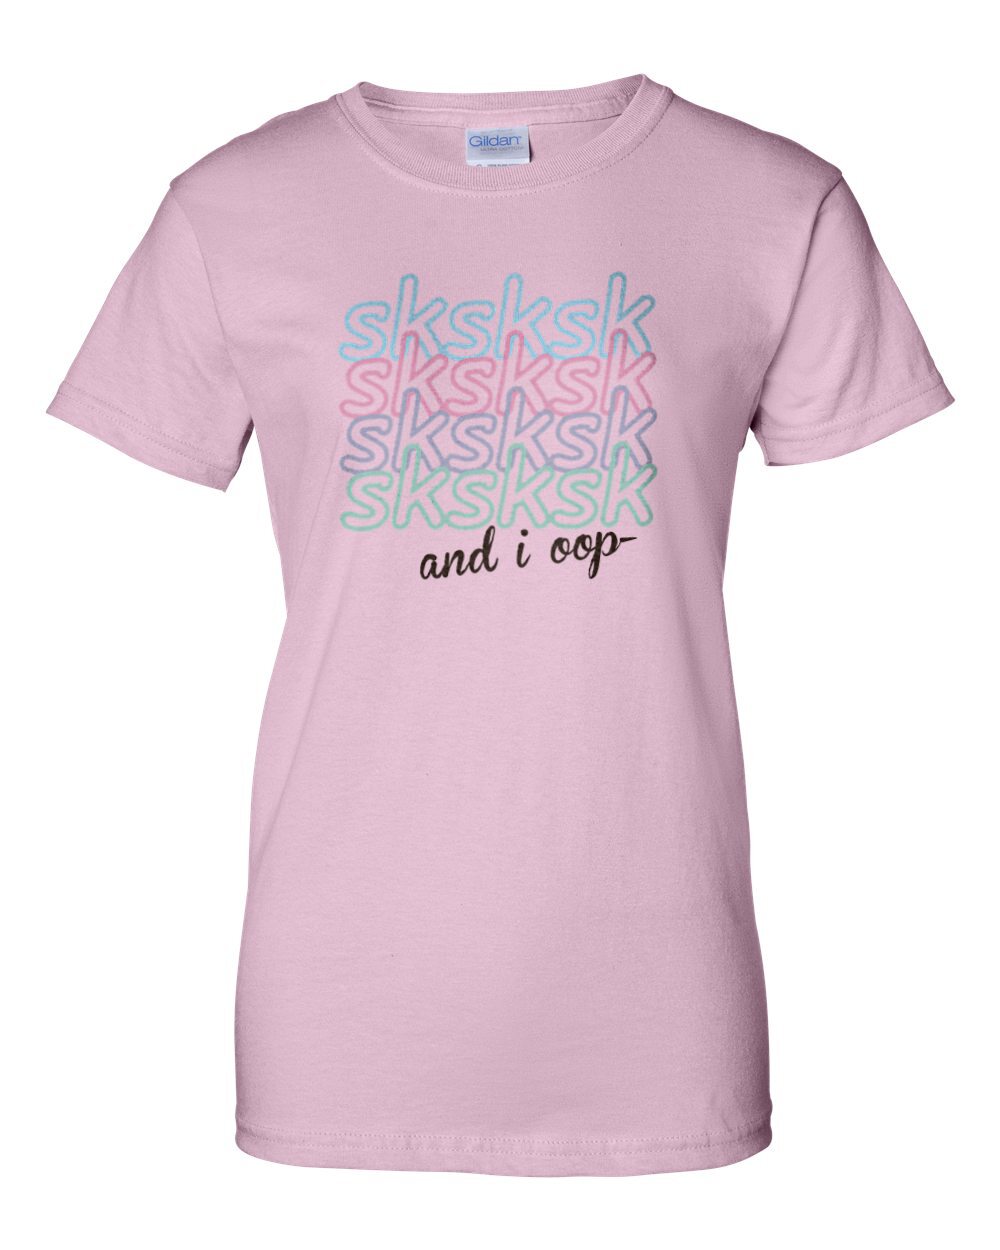 VSCO Girl Stuff Sksksk and I Oop Pink Graphic Pullover Hoodie For Kids Teens Women 